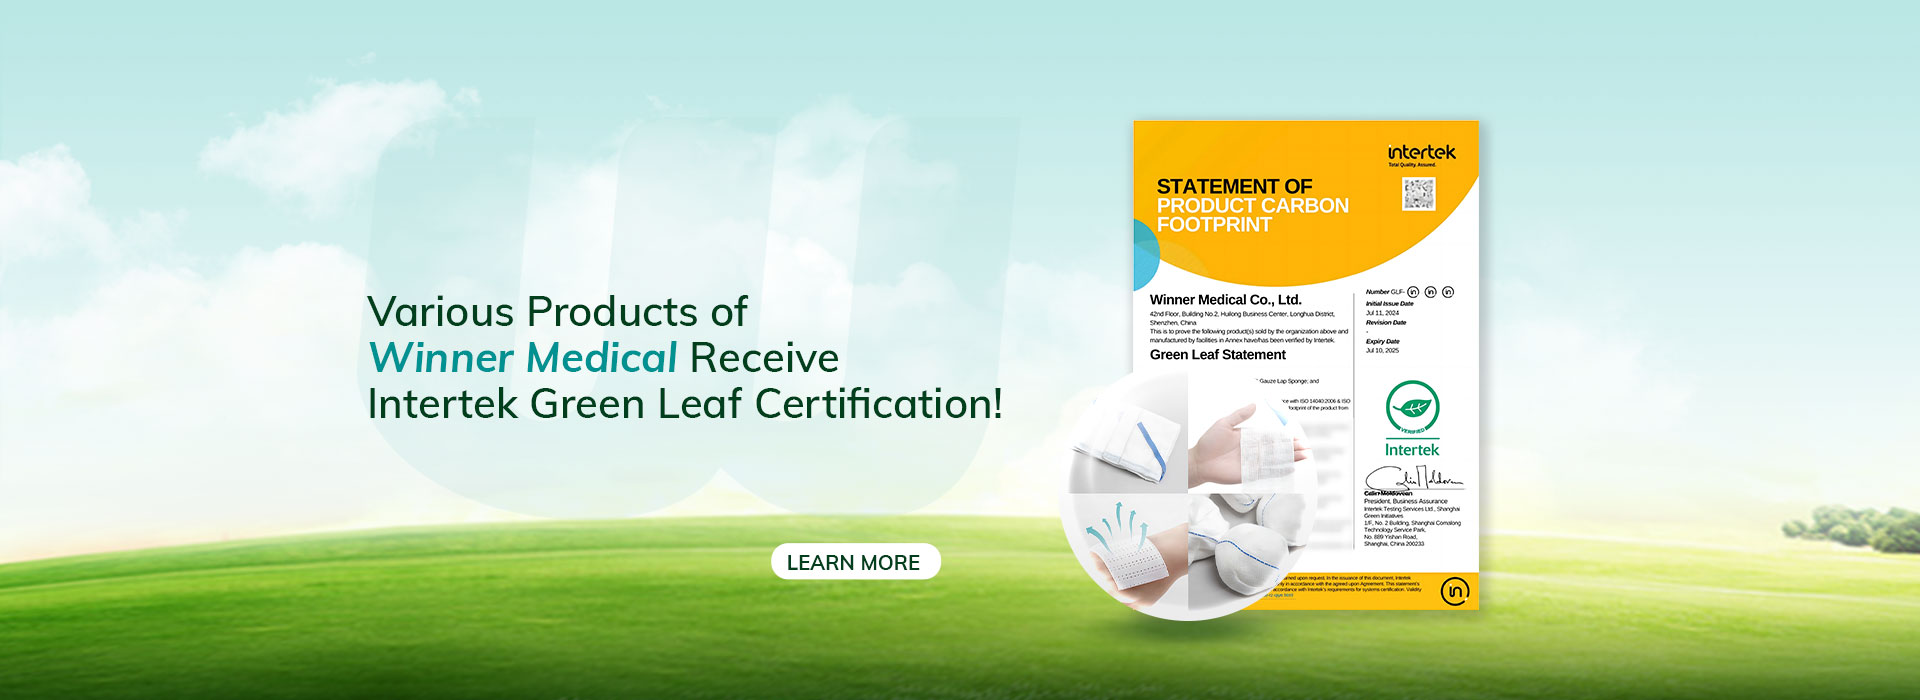 Les divers produits de Winner Medical reçoivent la certification Green Leaf d'Intertek!